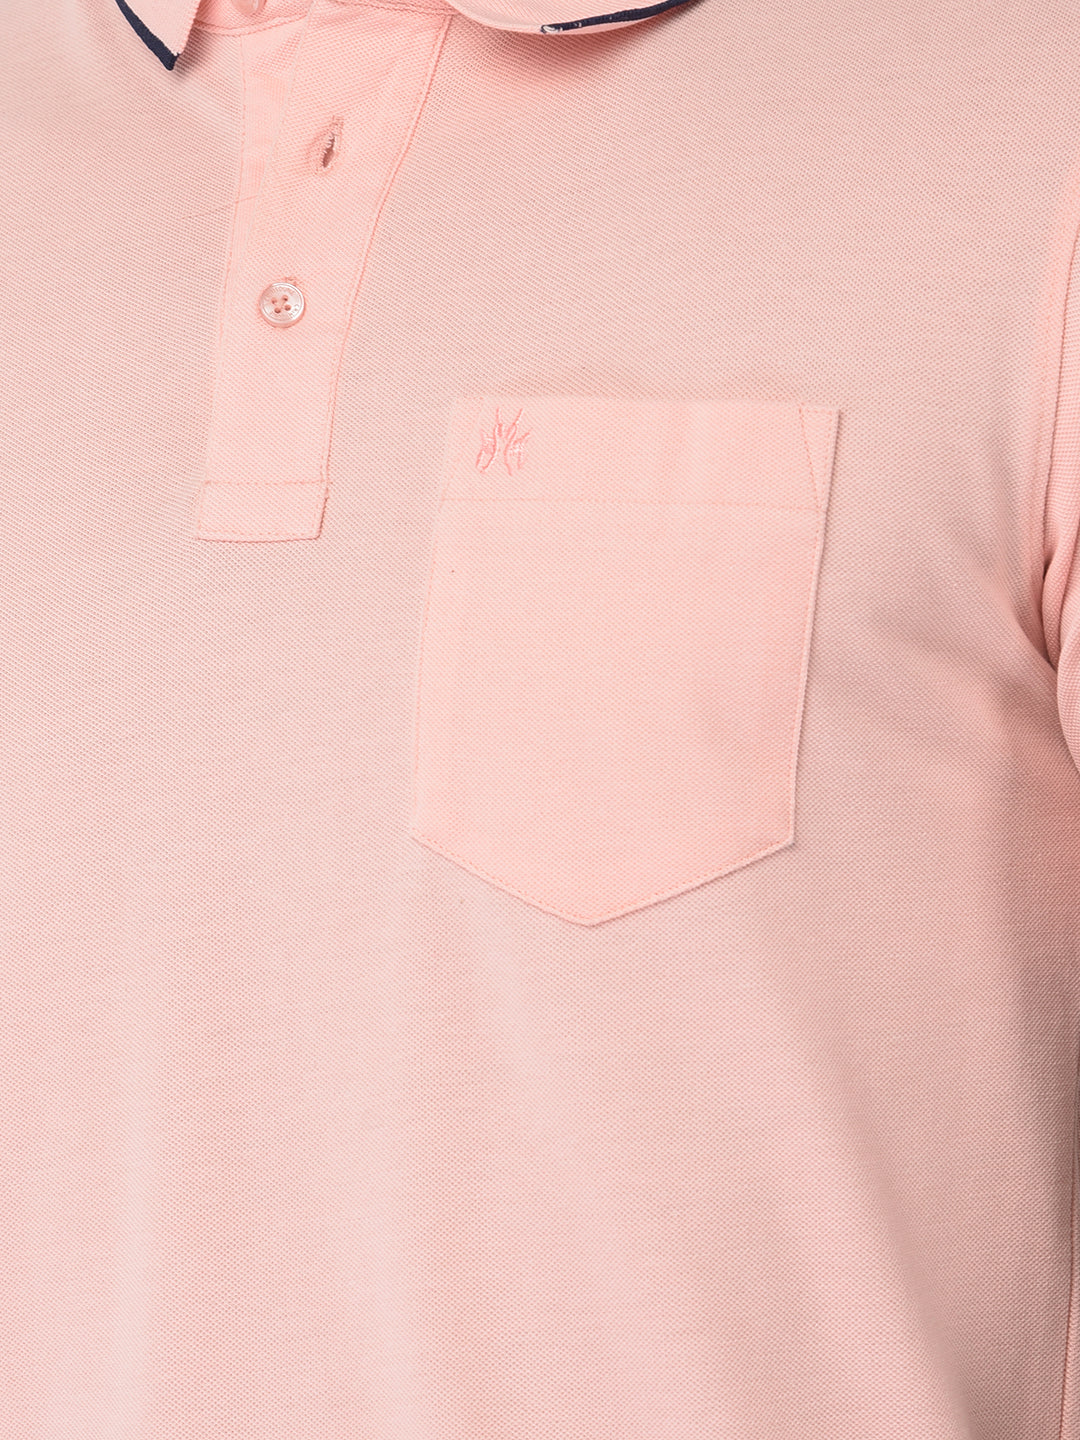 Pink Polo T-Shirt - Men T-Shirts